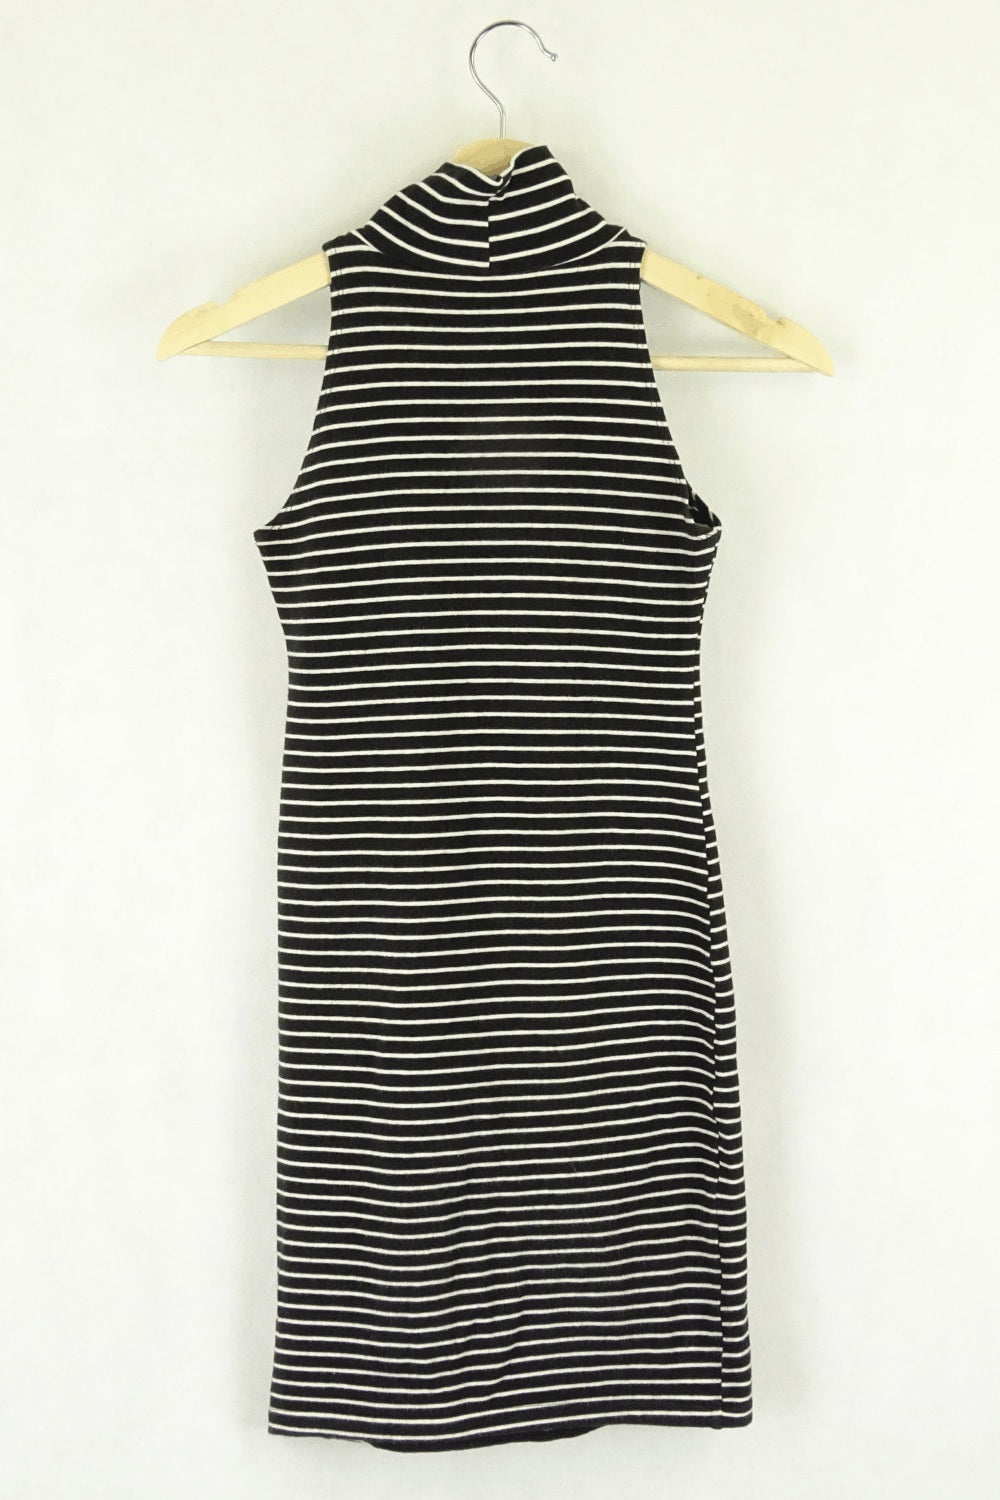 American Apparel Black And White Striped Bodycon Dress S